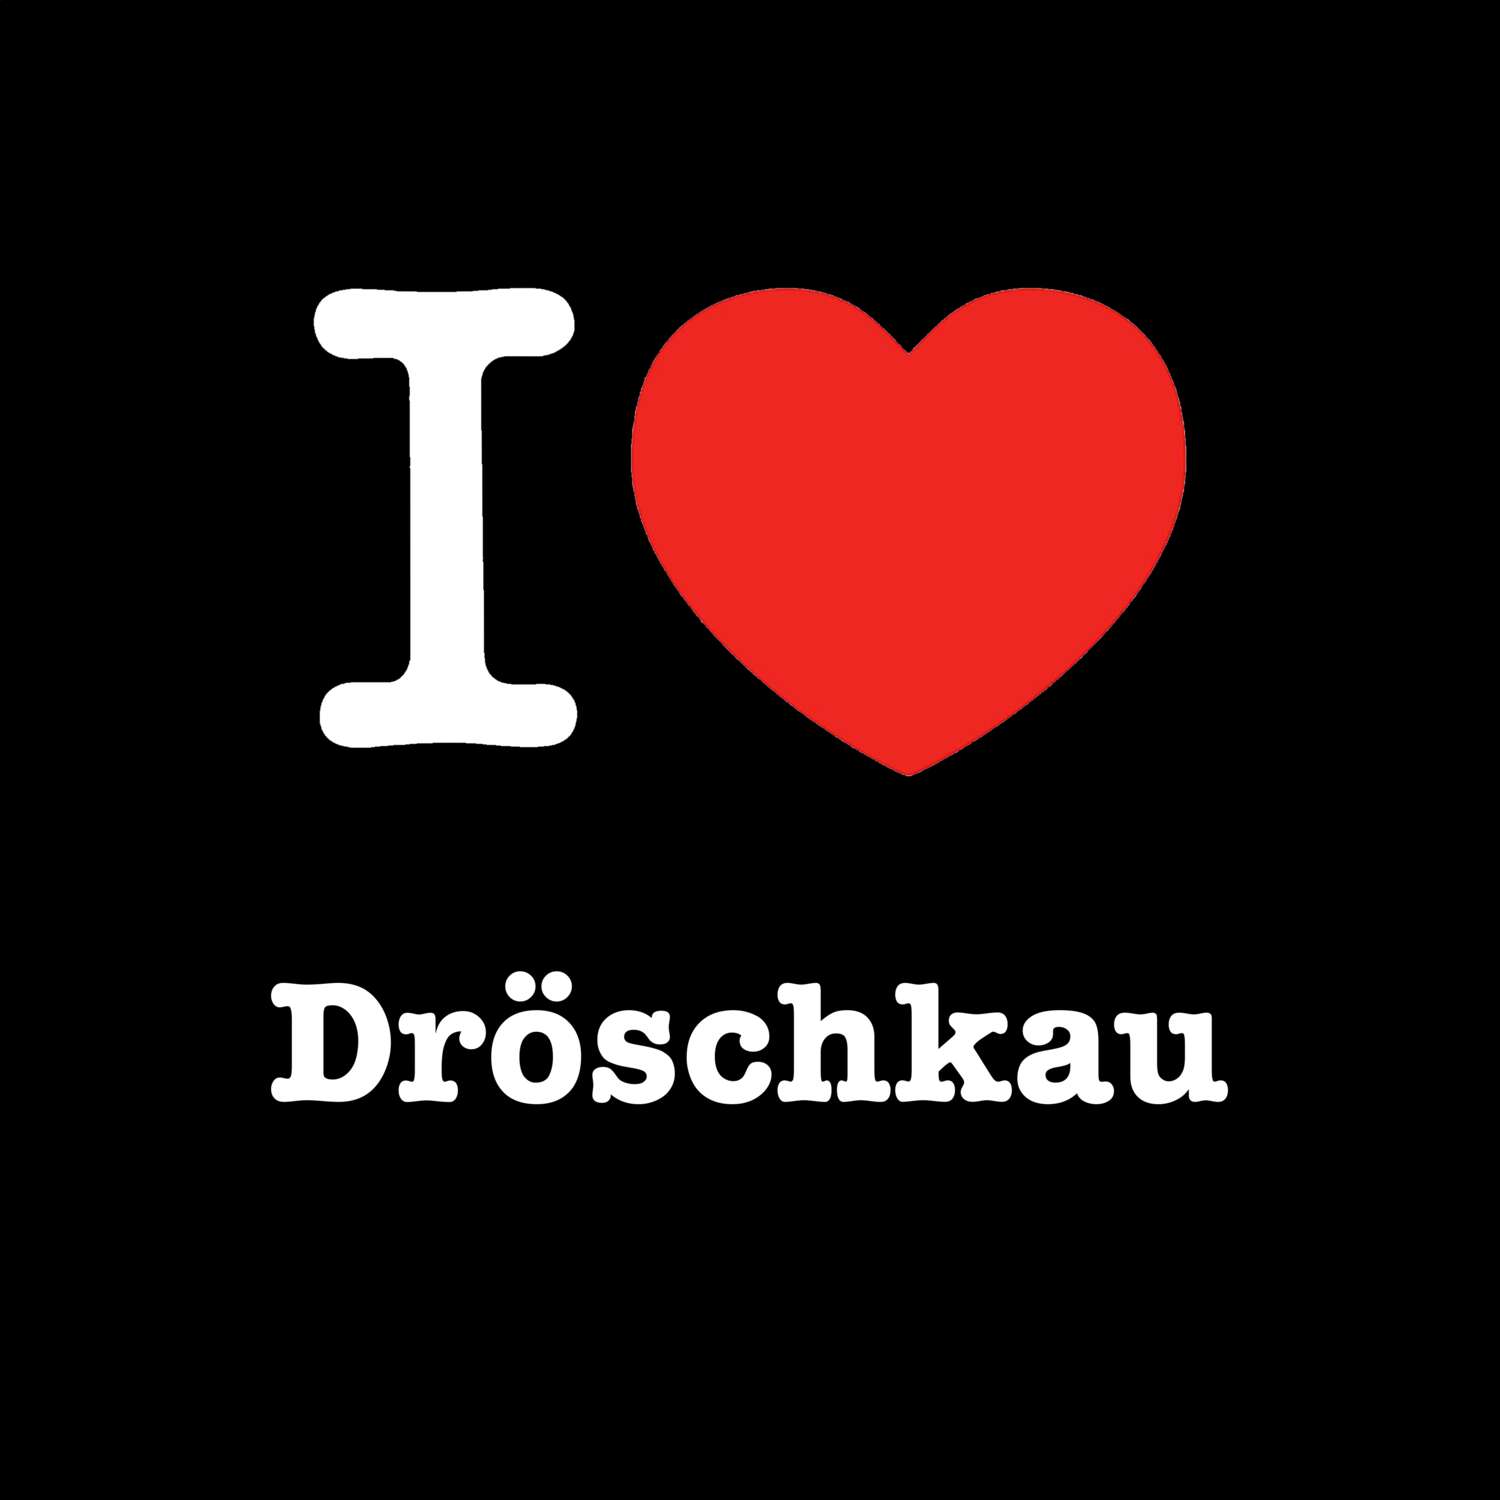 Dröschkau T-Shirt »I love«